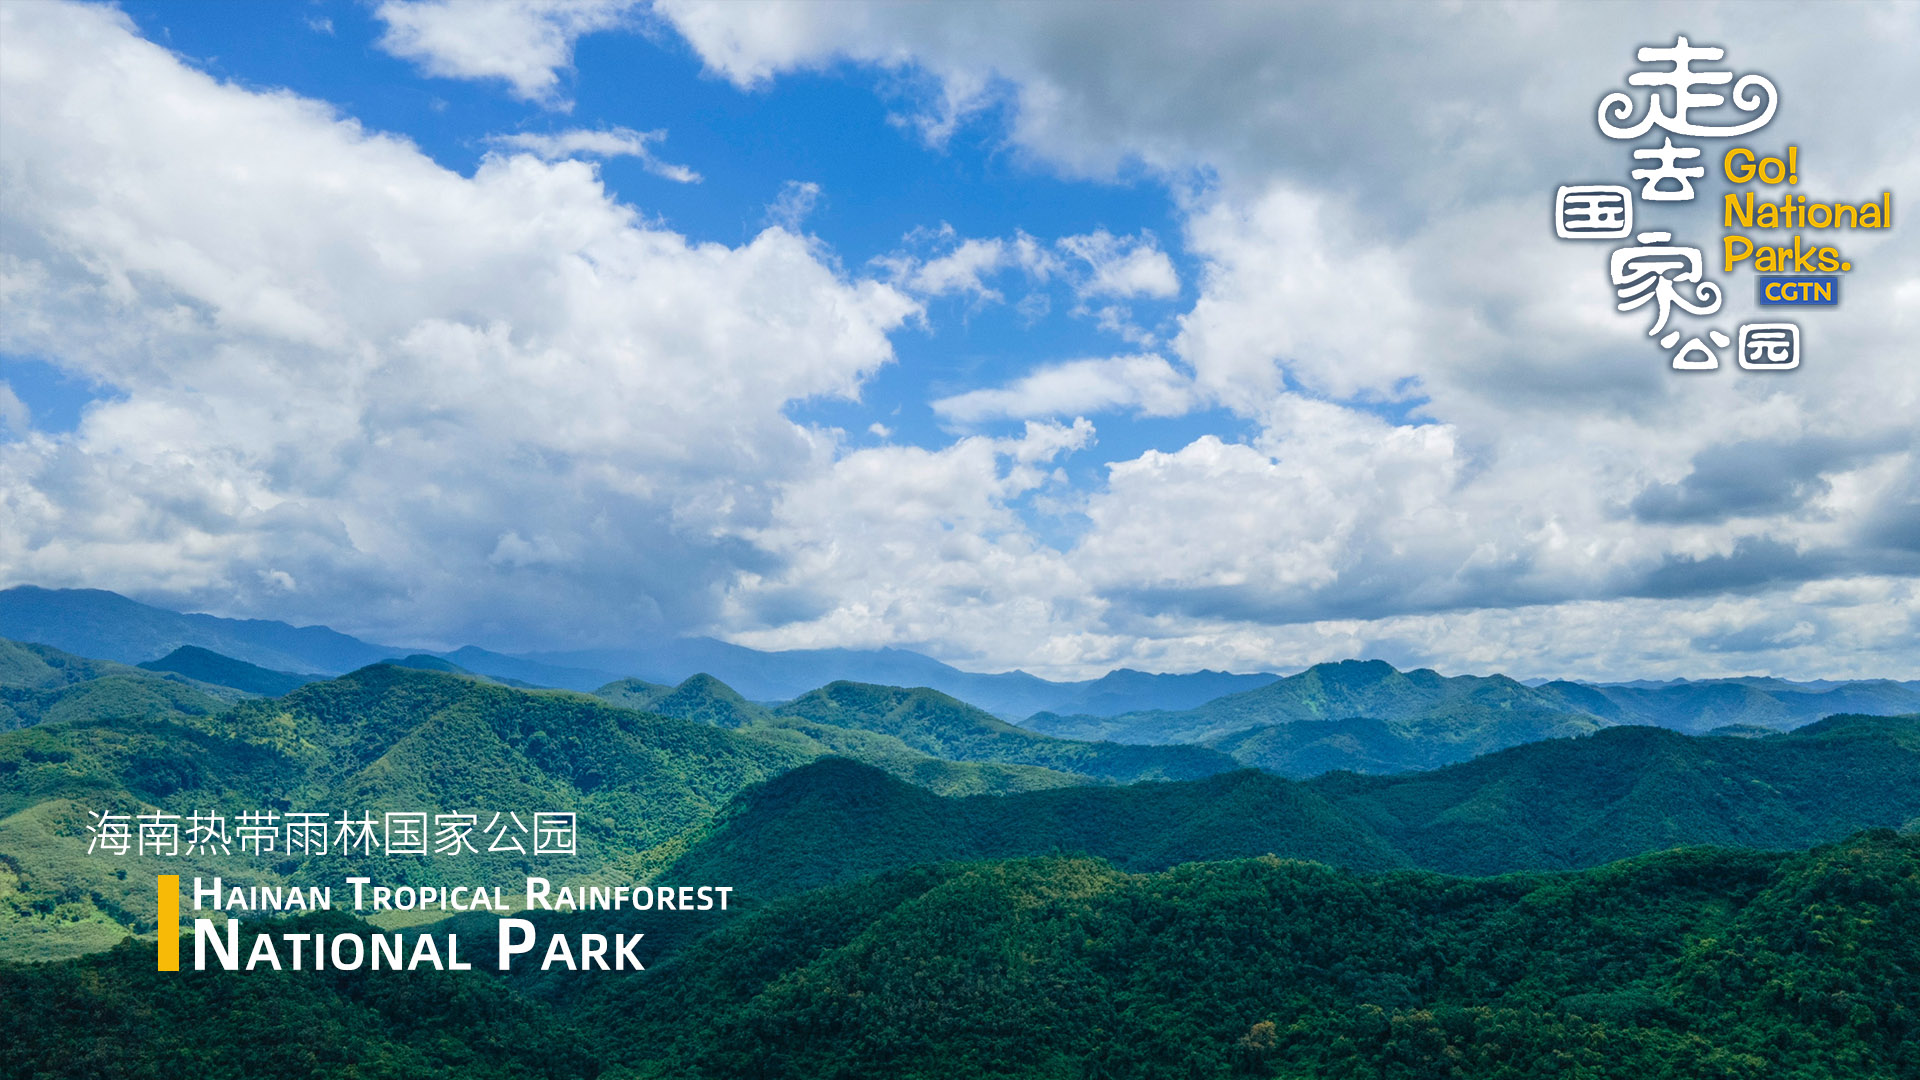 Go! Hainan Tropical Rainforest National Park